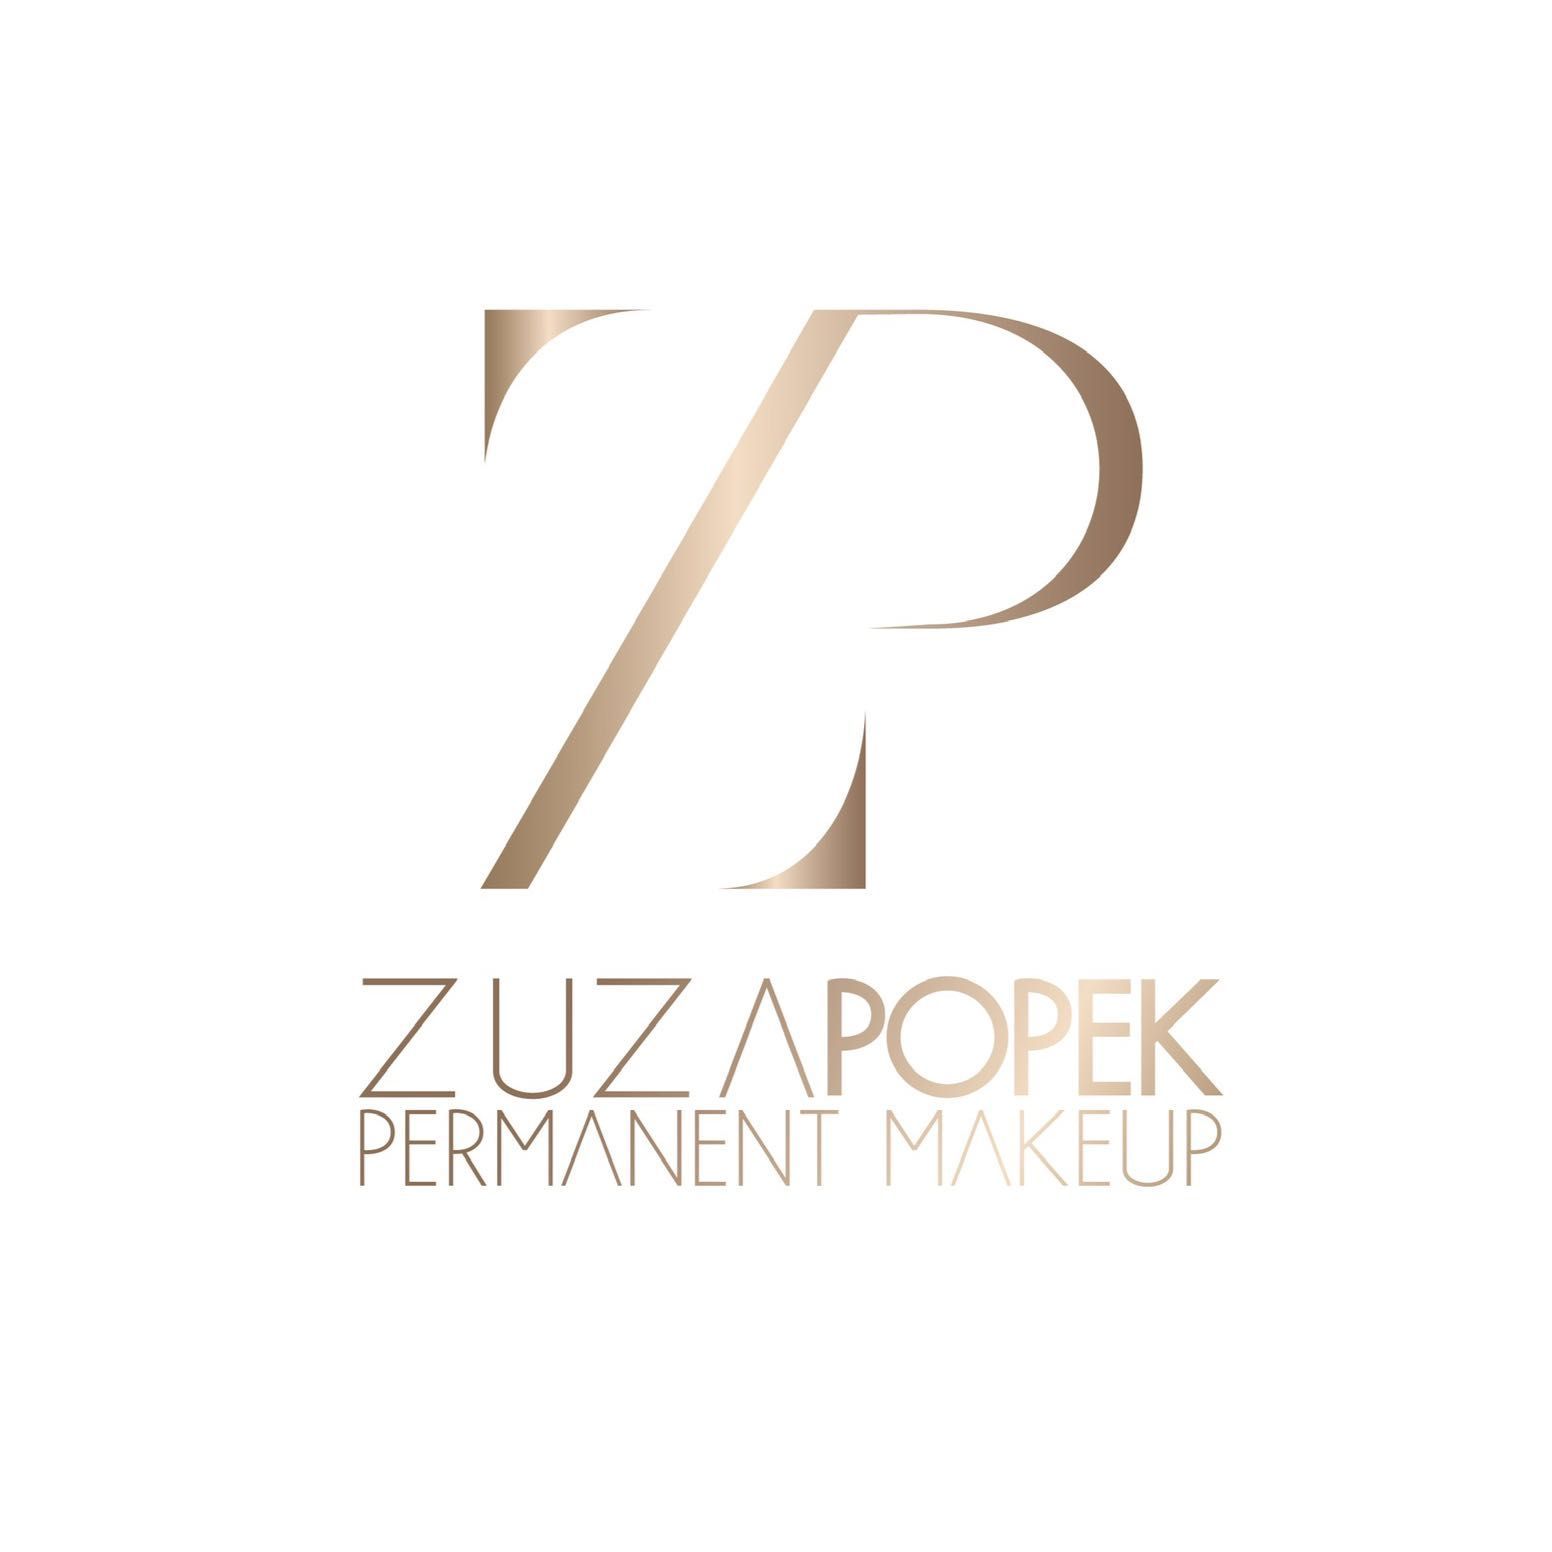 Zuza Popek Permanent Make Up, Jagiellońska 5a, 3a, 05-120, Legionowo